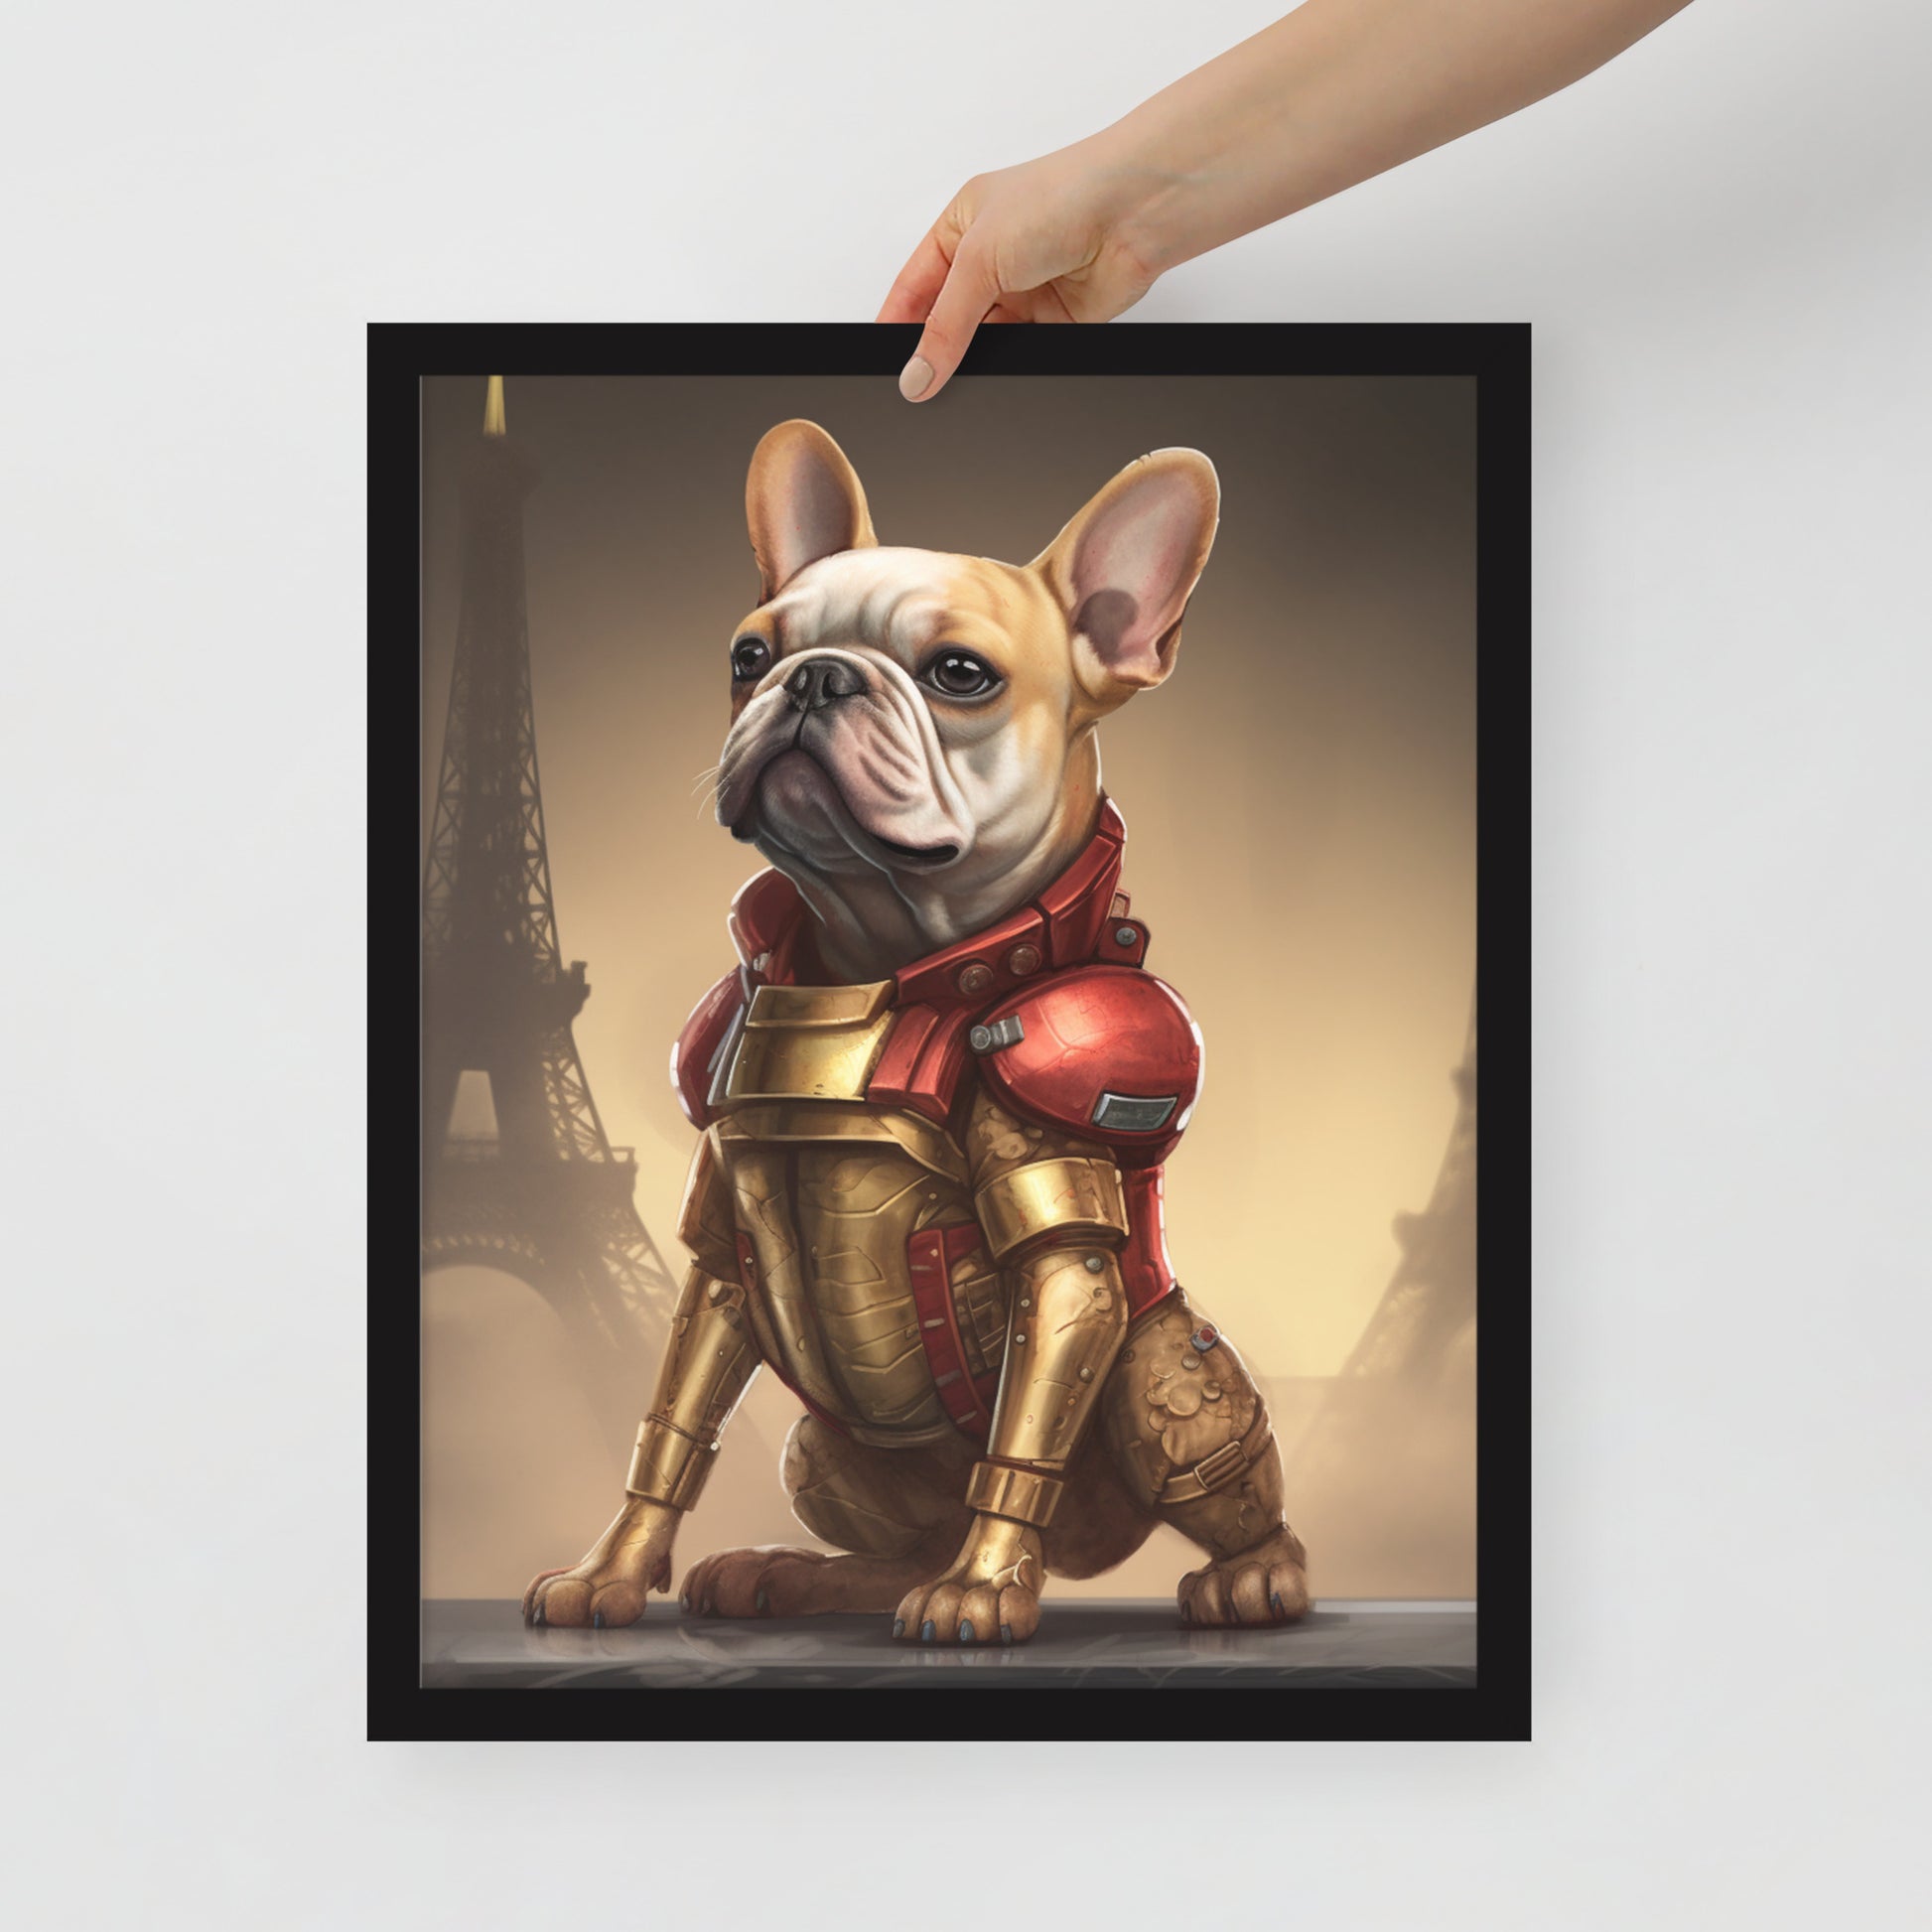 French Bulldog Enchantment - Artistic Framed Poster